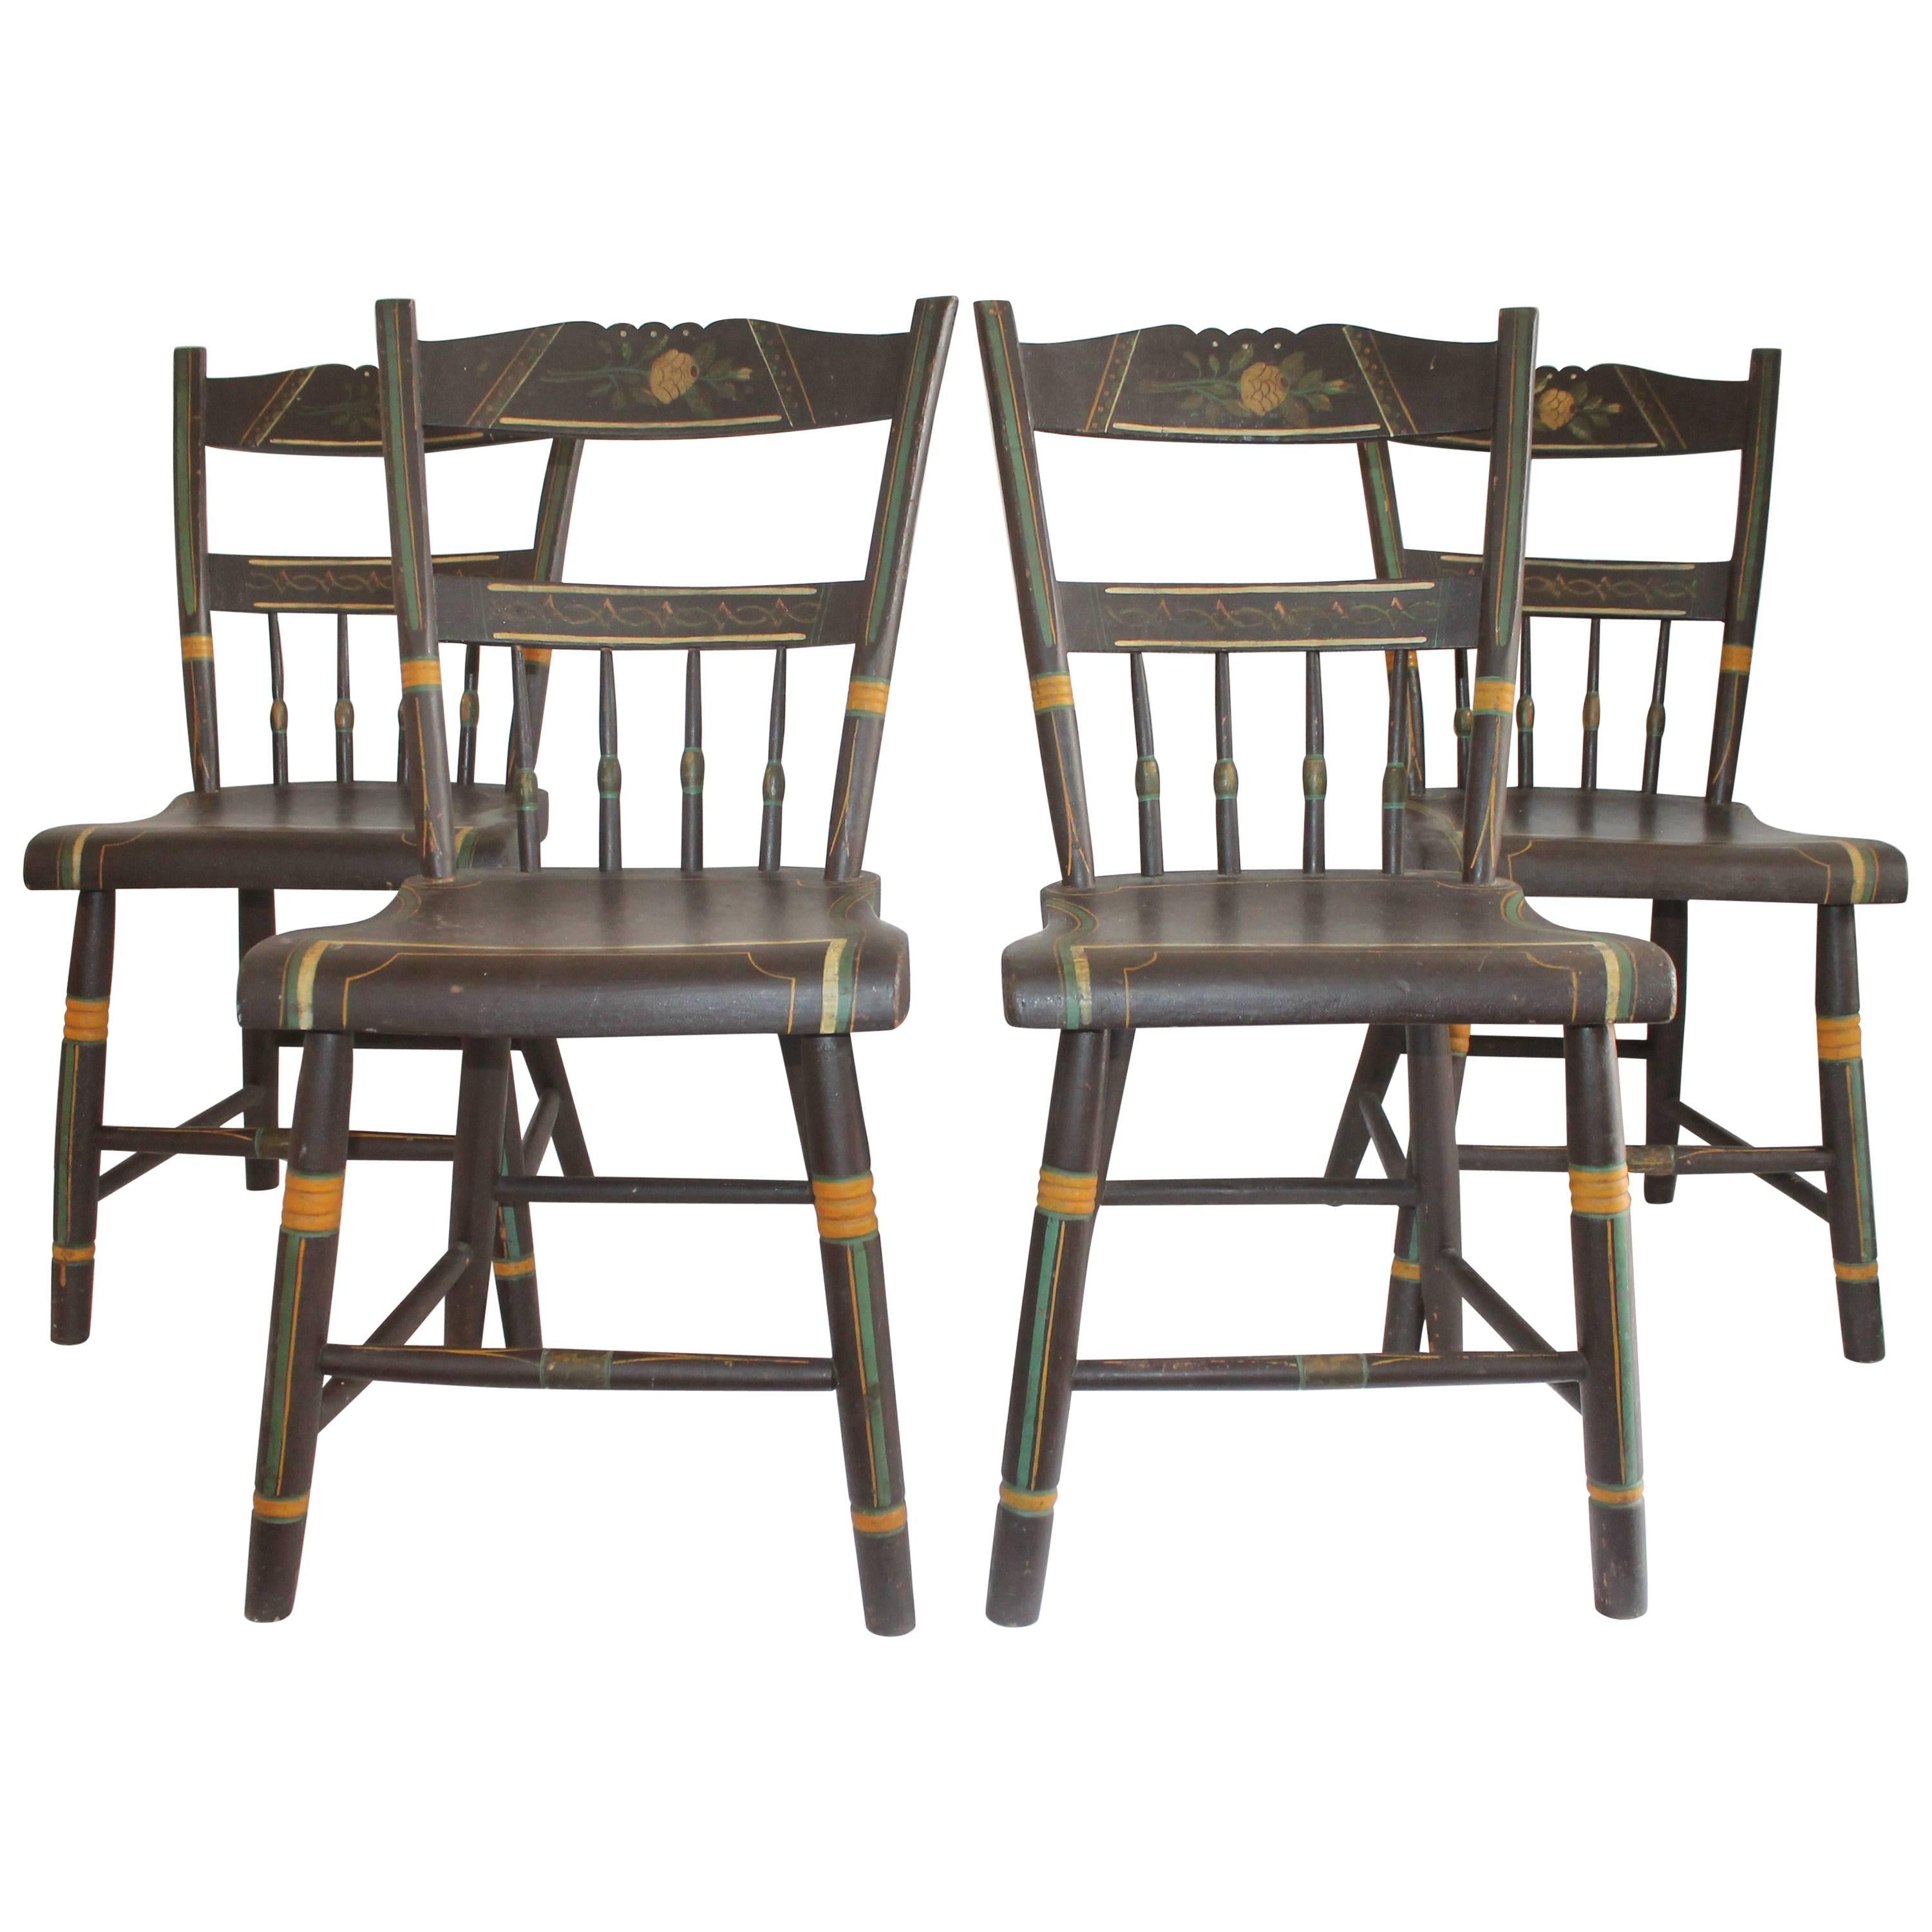 19th Century Original Paint Decorated Pennsylvania Plank Bottom Chairs